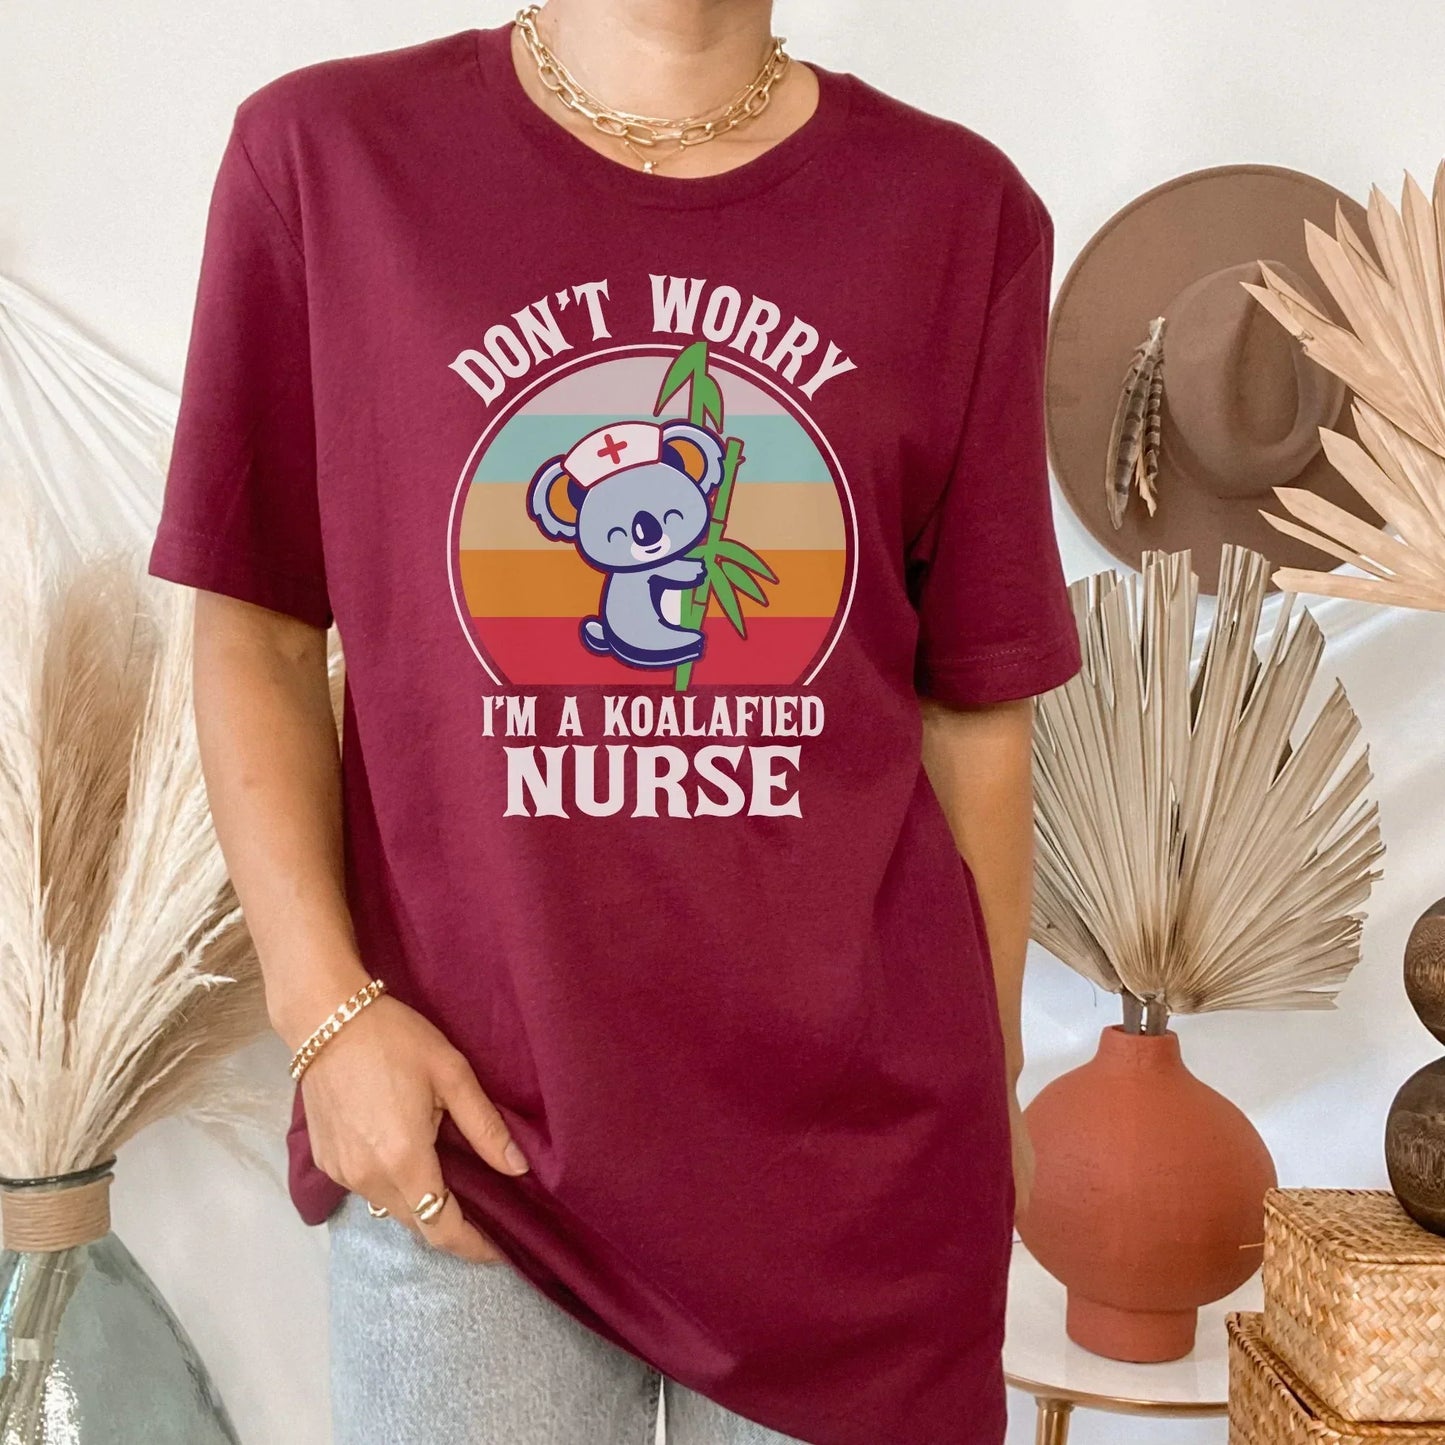 Kolafied, Registered Nurse Shirt, Nursing Student, Pediatric Nurse, ER Nurse Sweatshirt, Nurse Gift, Nurse Hoodie, Funny Nurse Shirt, Nurse Practitioner HMDesignStudioUS